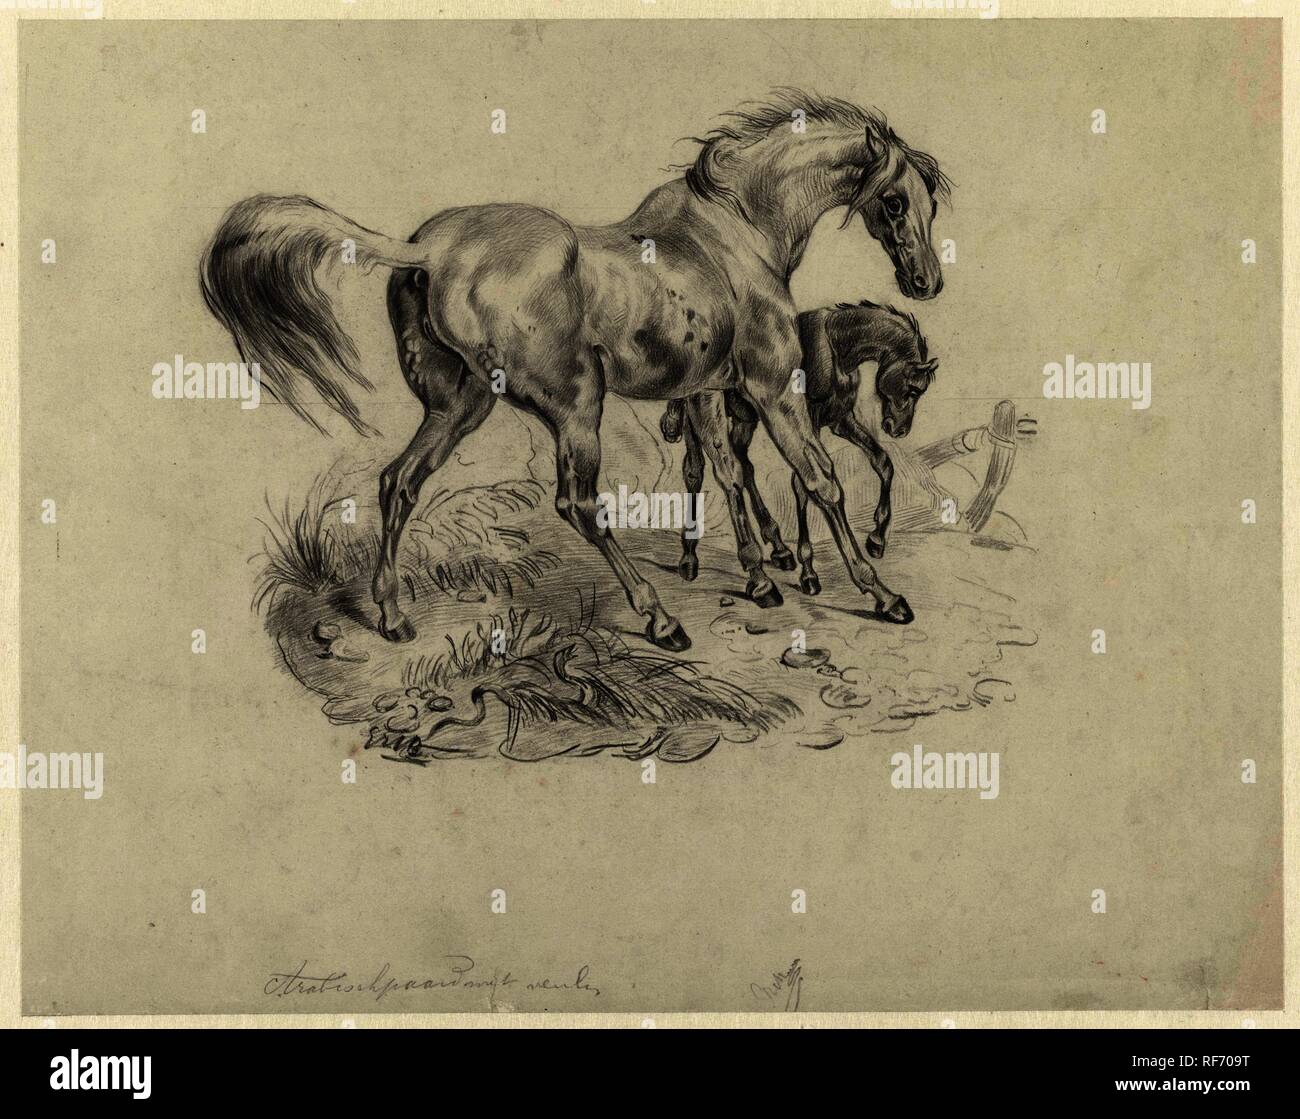 Arabian horse with foal. Artist: Schmidt (graveur). Draughtsman: George Hendrik Breitner. Dating: 1867 - 1923. Measurements: h 298 mm × w 378 mm. Museum: Rijksmuseum, Amsterdam. Stock Photo